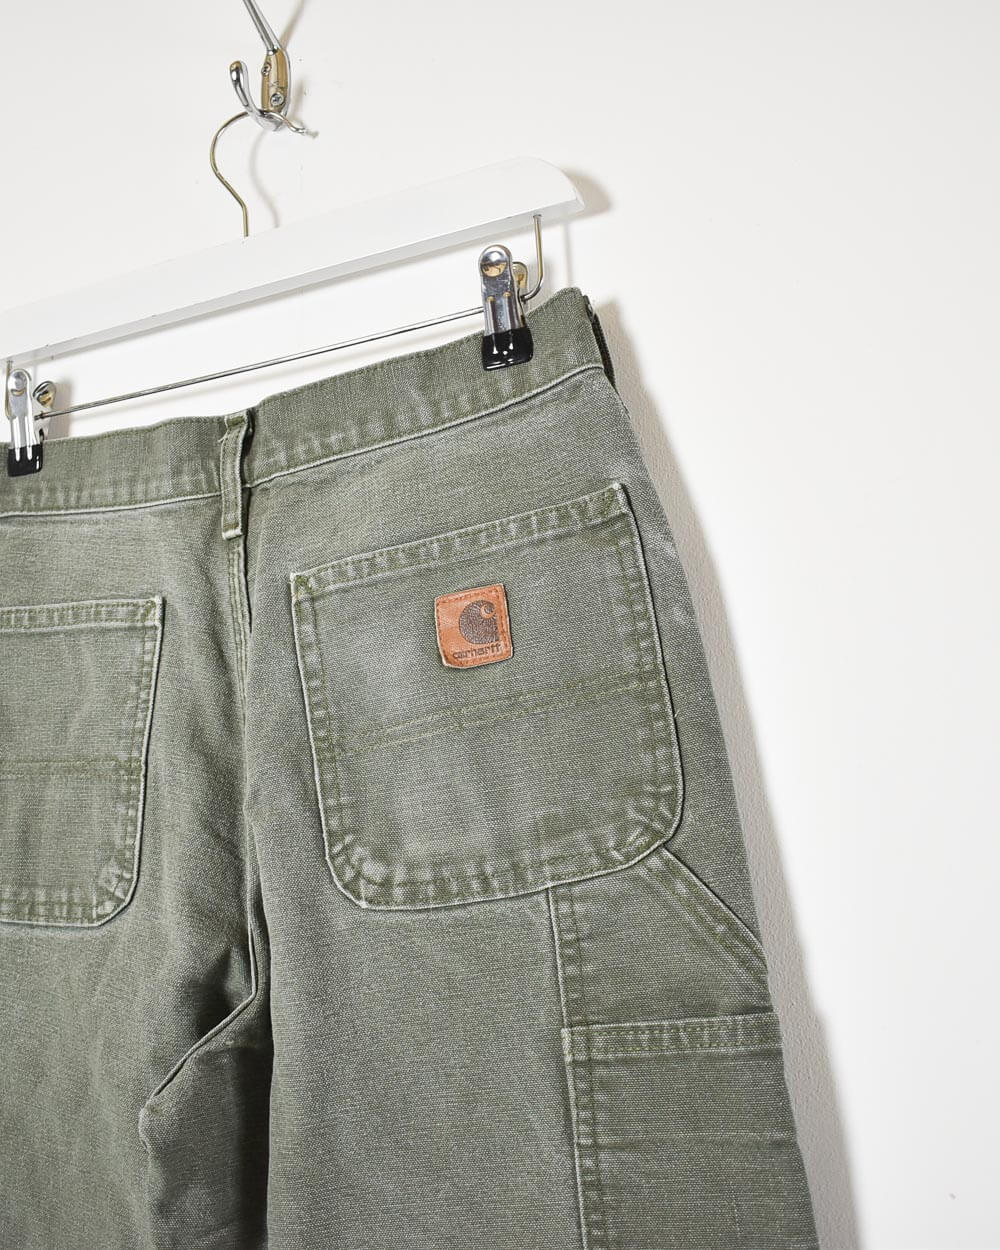 Carhartt Jeans 30 90s Workwear Carpenter Pants Olive Green Work Baggy Cargo  Straight Leg Vintage 1990s Streetwear Work Wear Small 